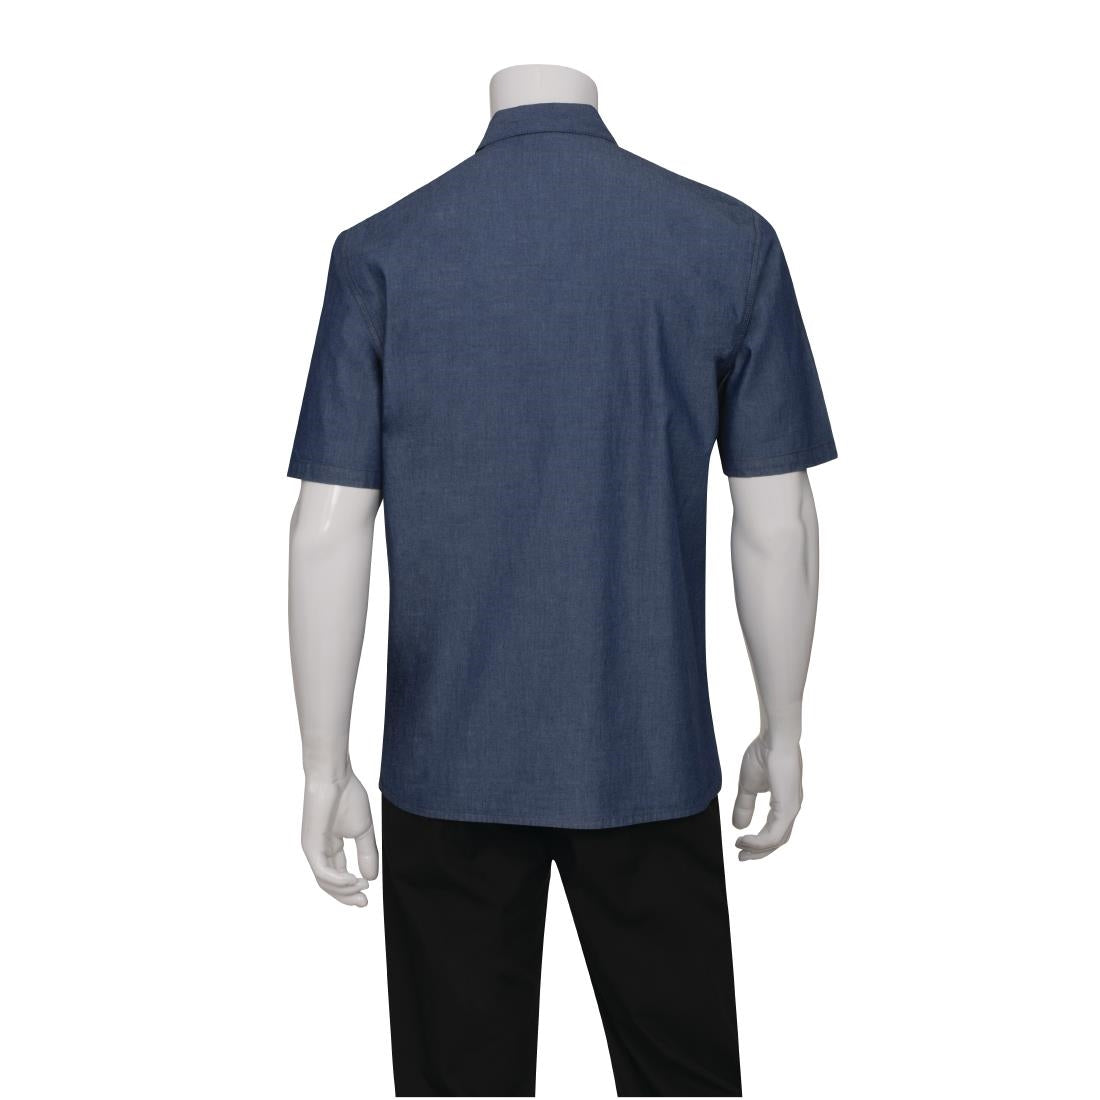 B074-XL Chef Works Detroit Unisex Denim Shirt Short Sleeve Blue XL JD Catering Equipment Solutions Ltd